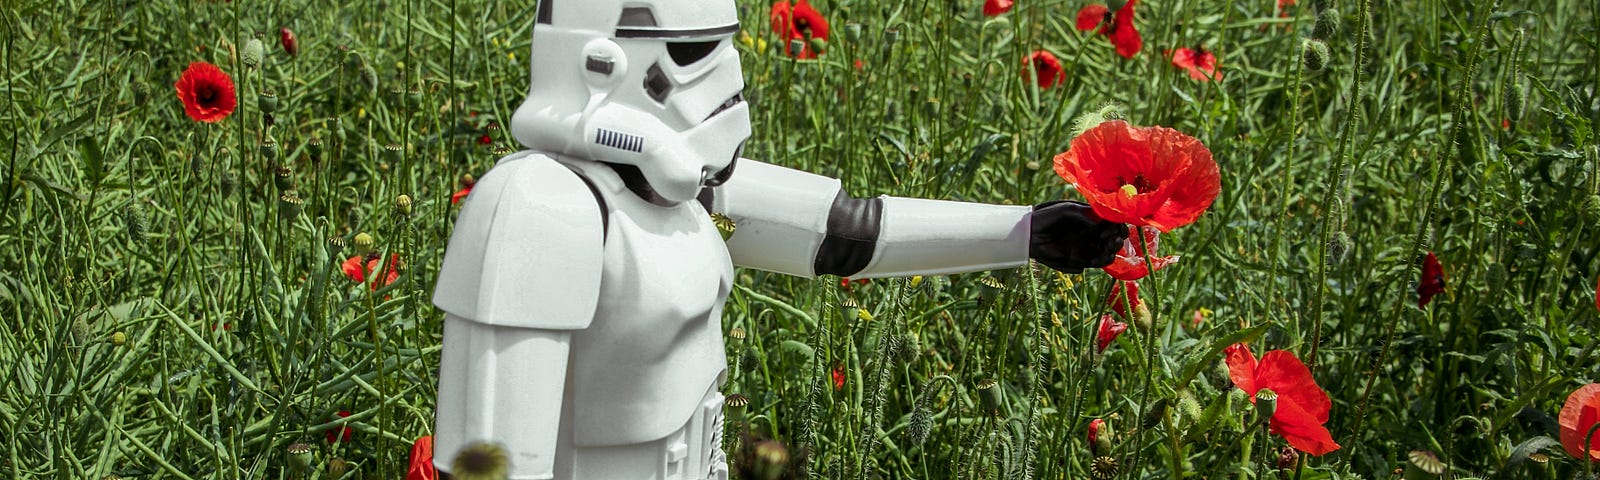 Stormtrooper in a garden of flowers.